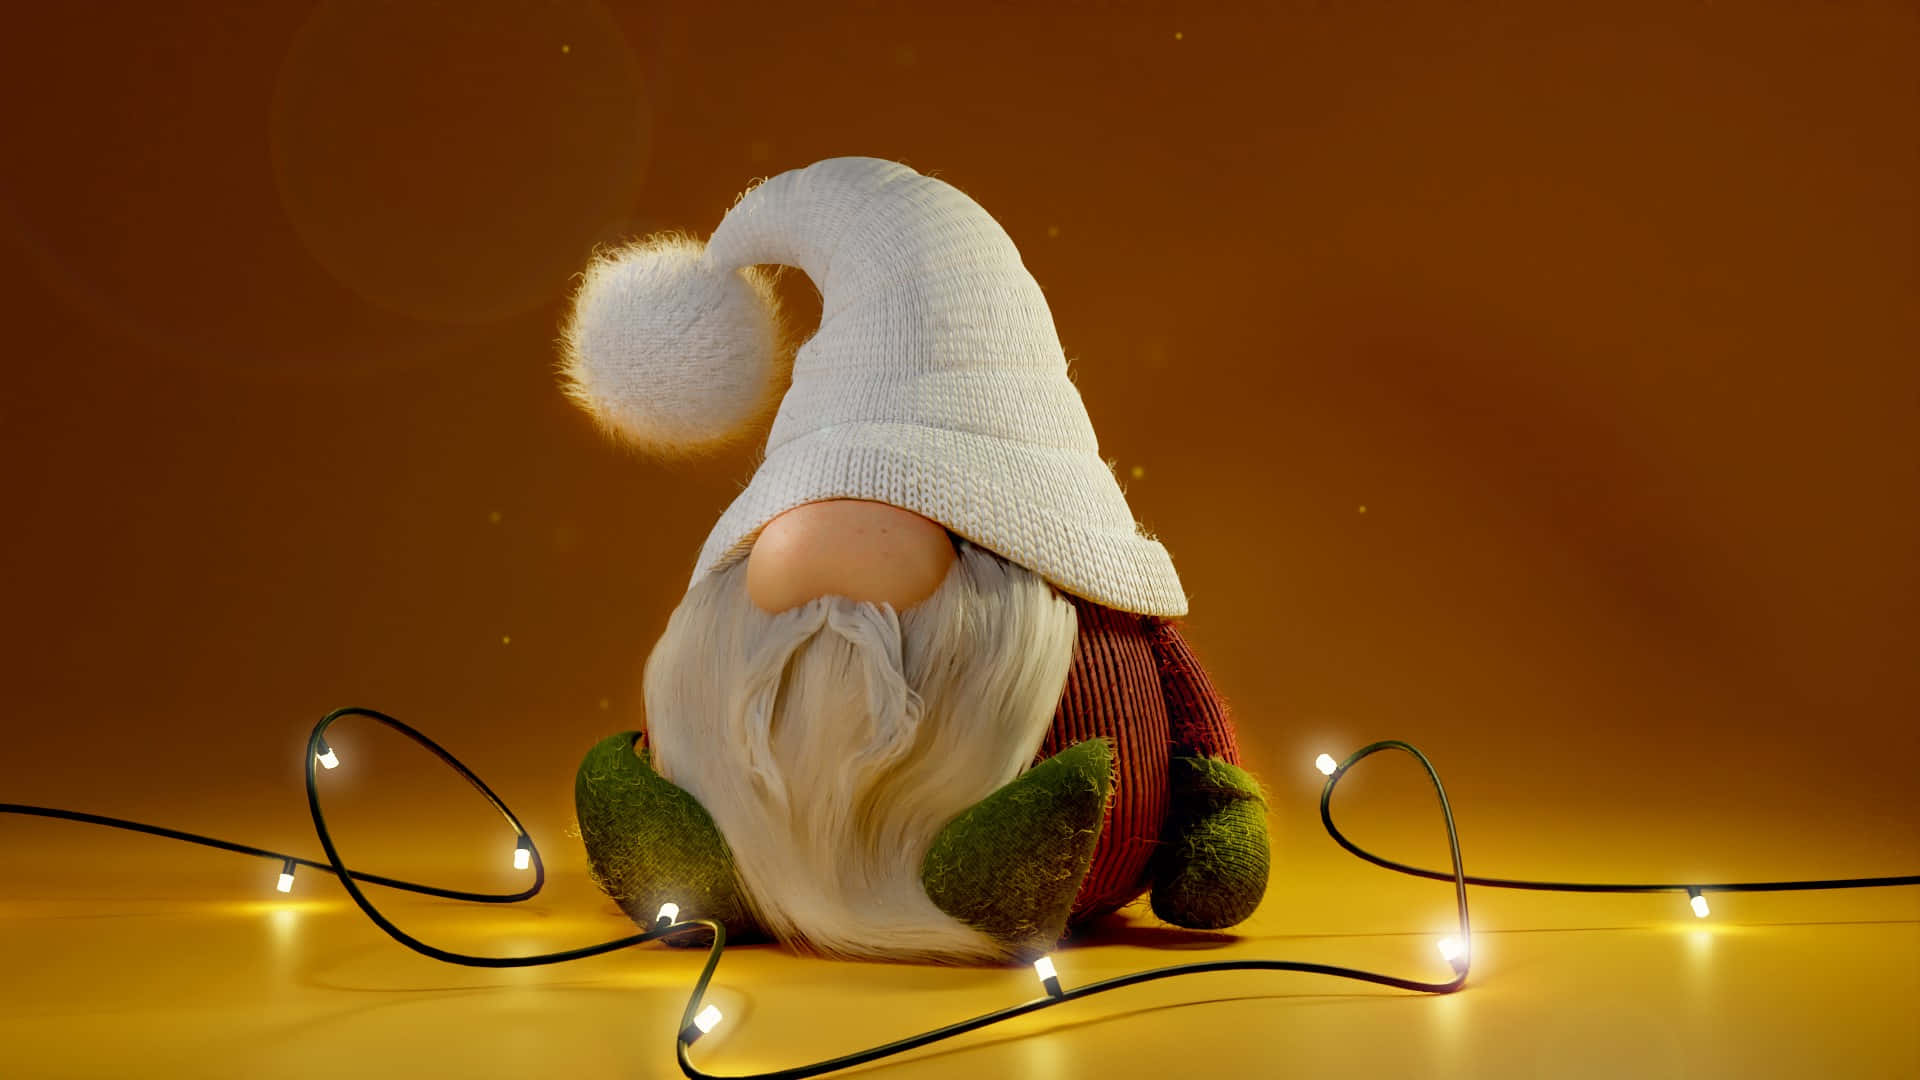 Festive Gnome With Lights.jpg Wallpaper